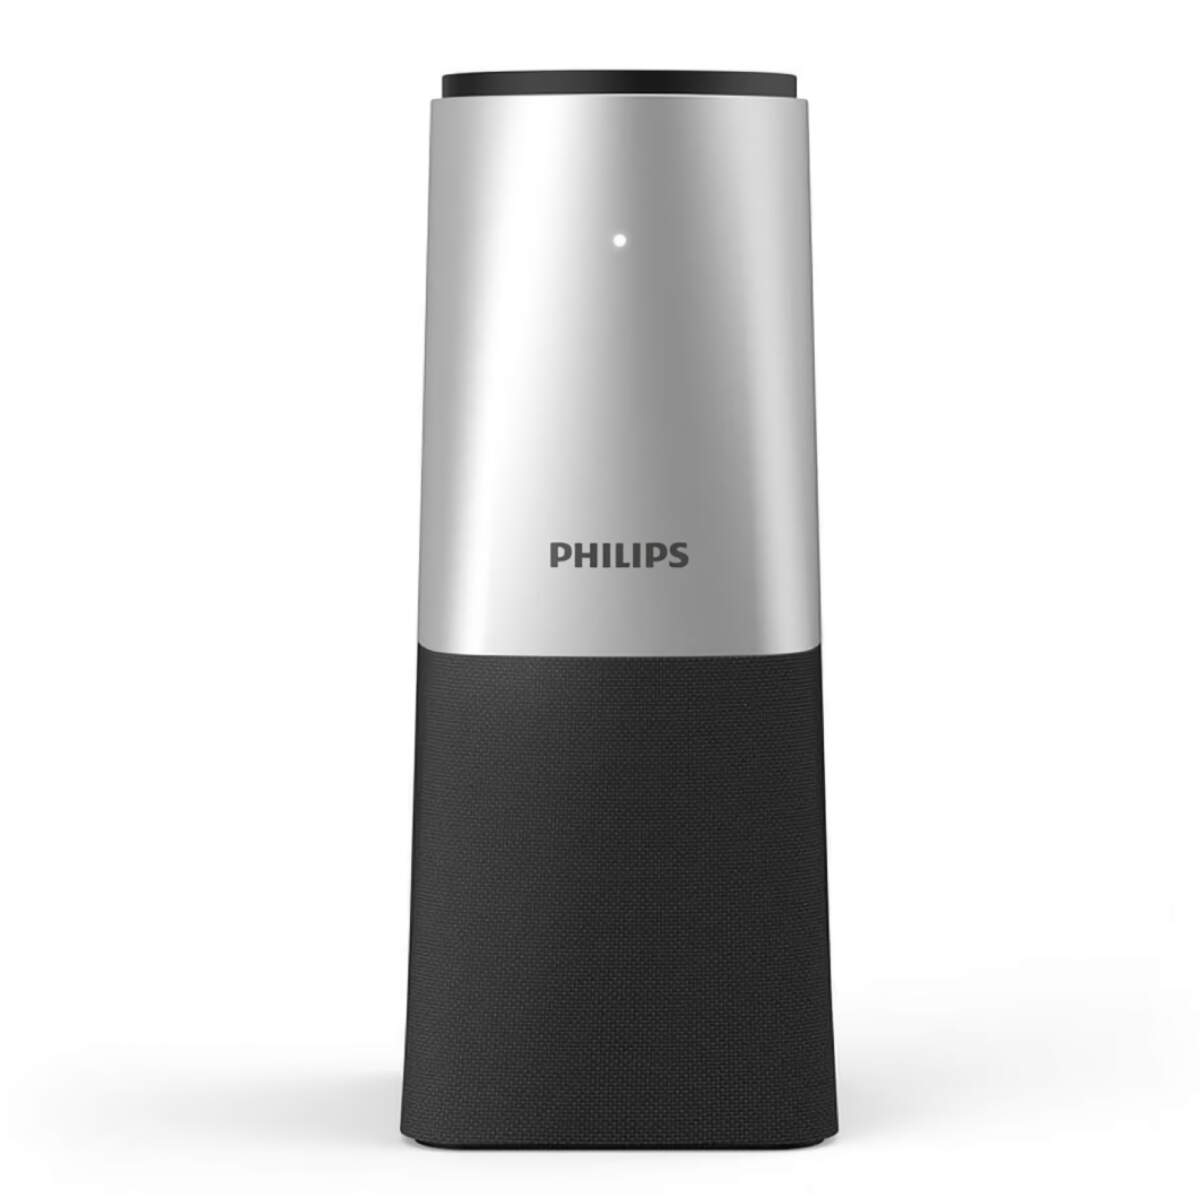 Philips Smart Meeting PSE0540 image